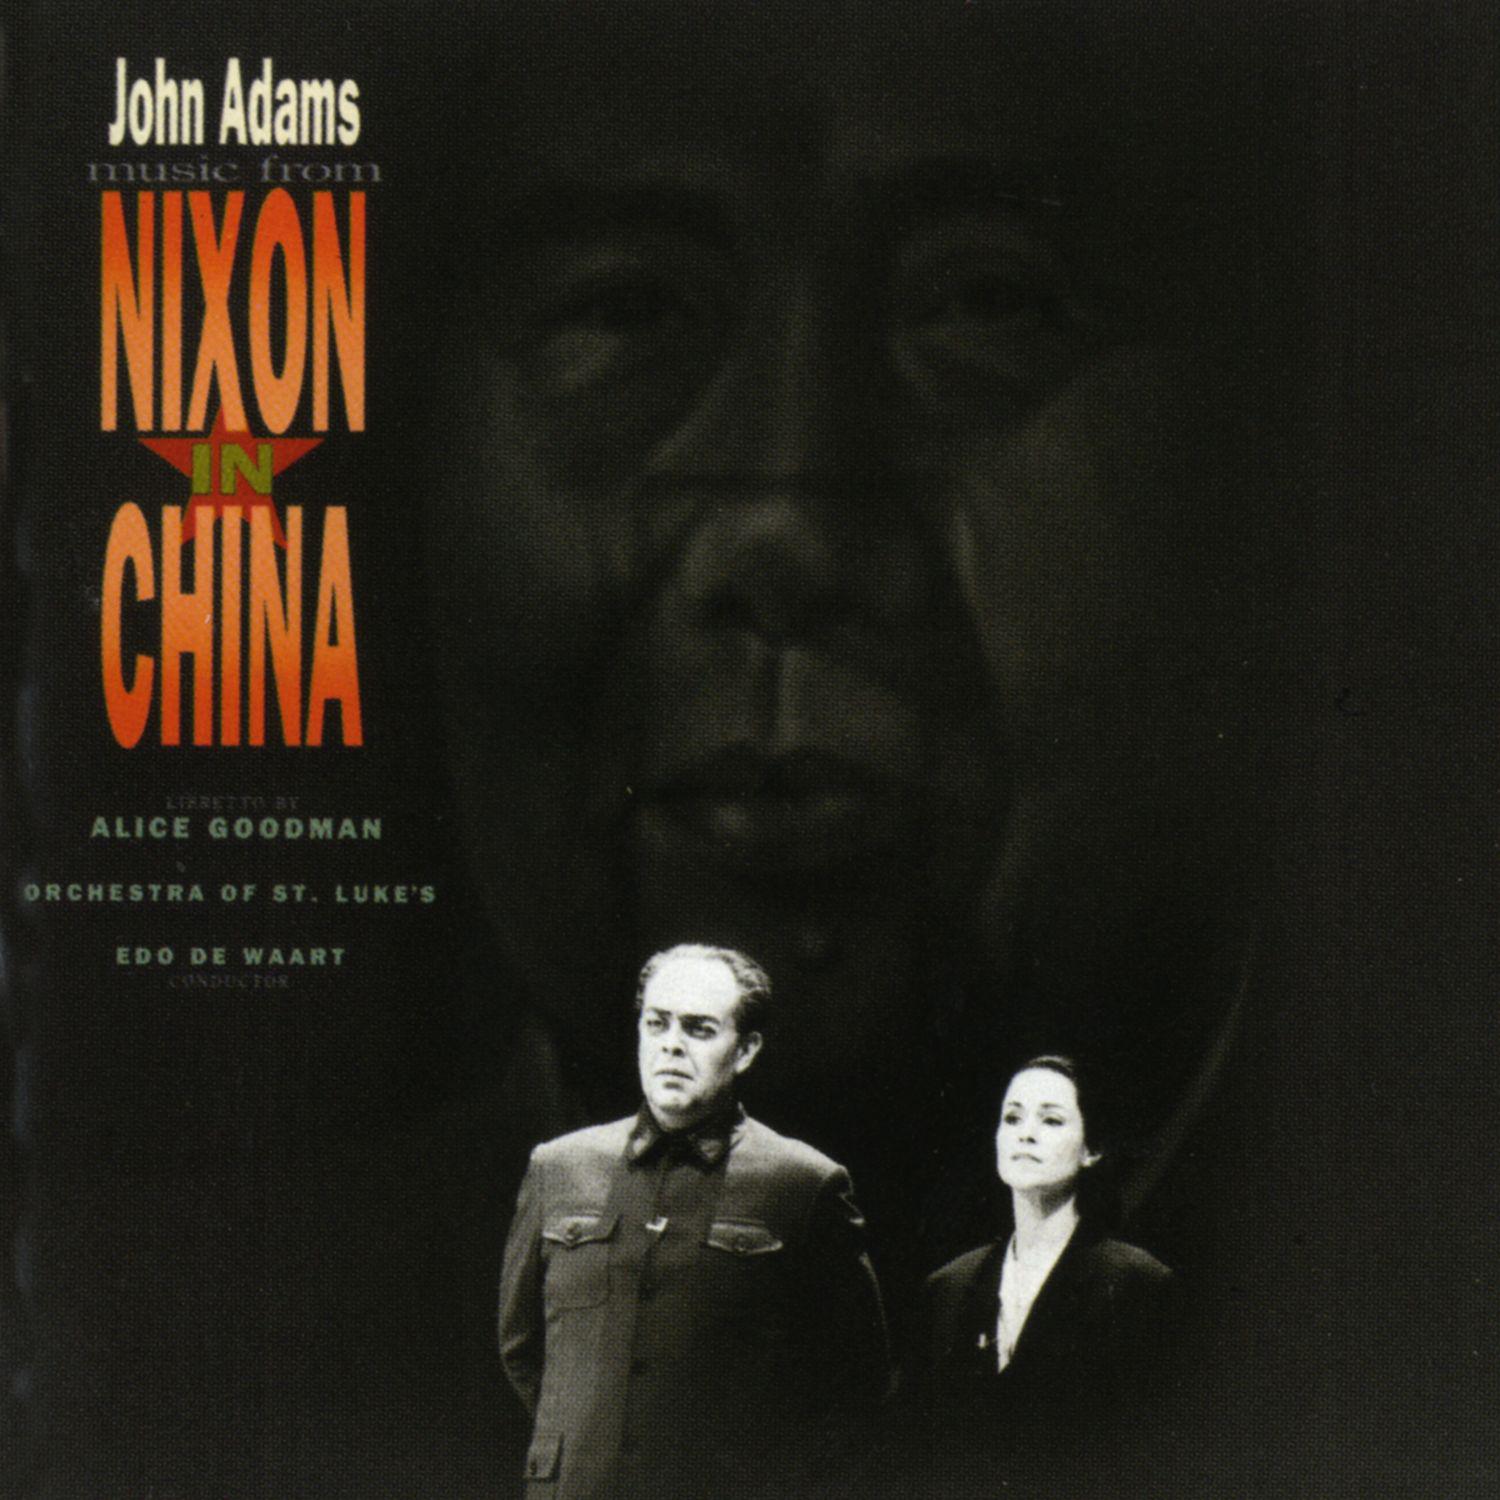 Nixon in China, Act I, Scene 3:"Ladies and Gentlemen, Comrades and Friends"